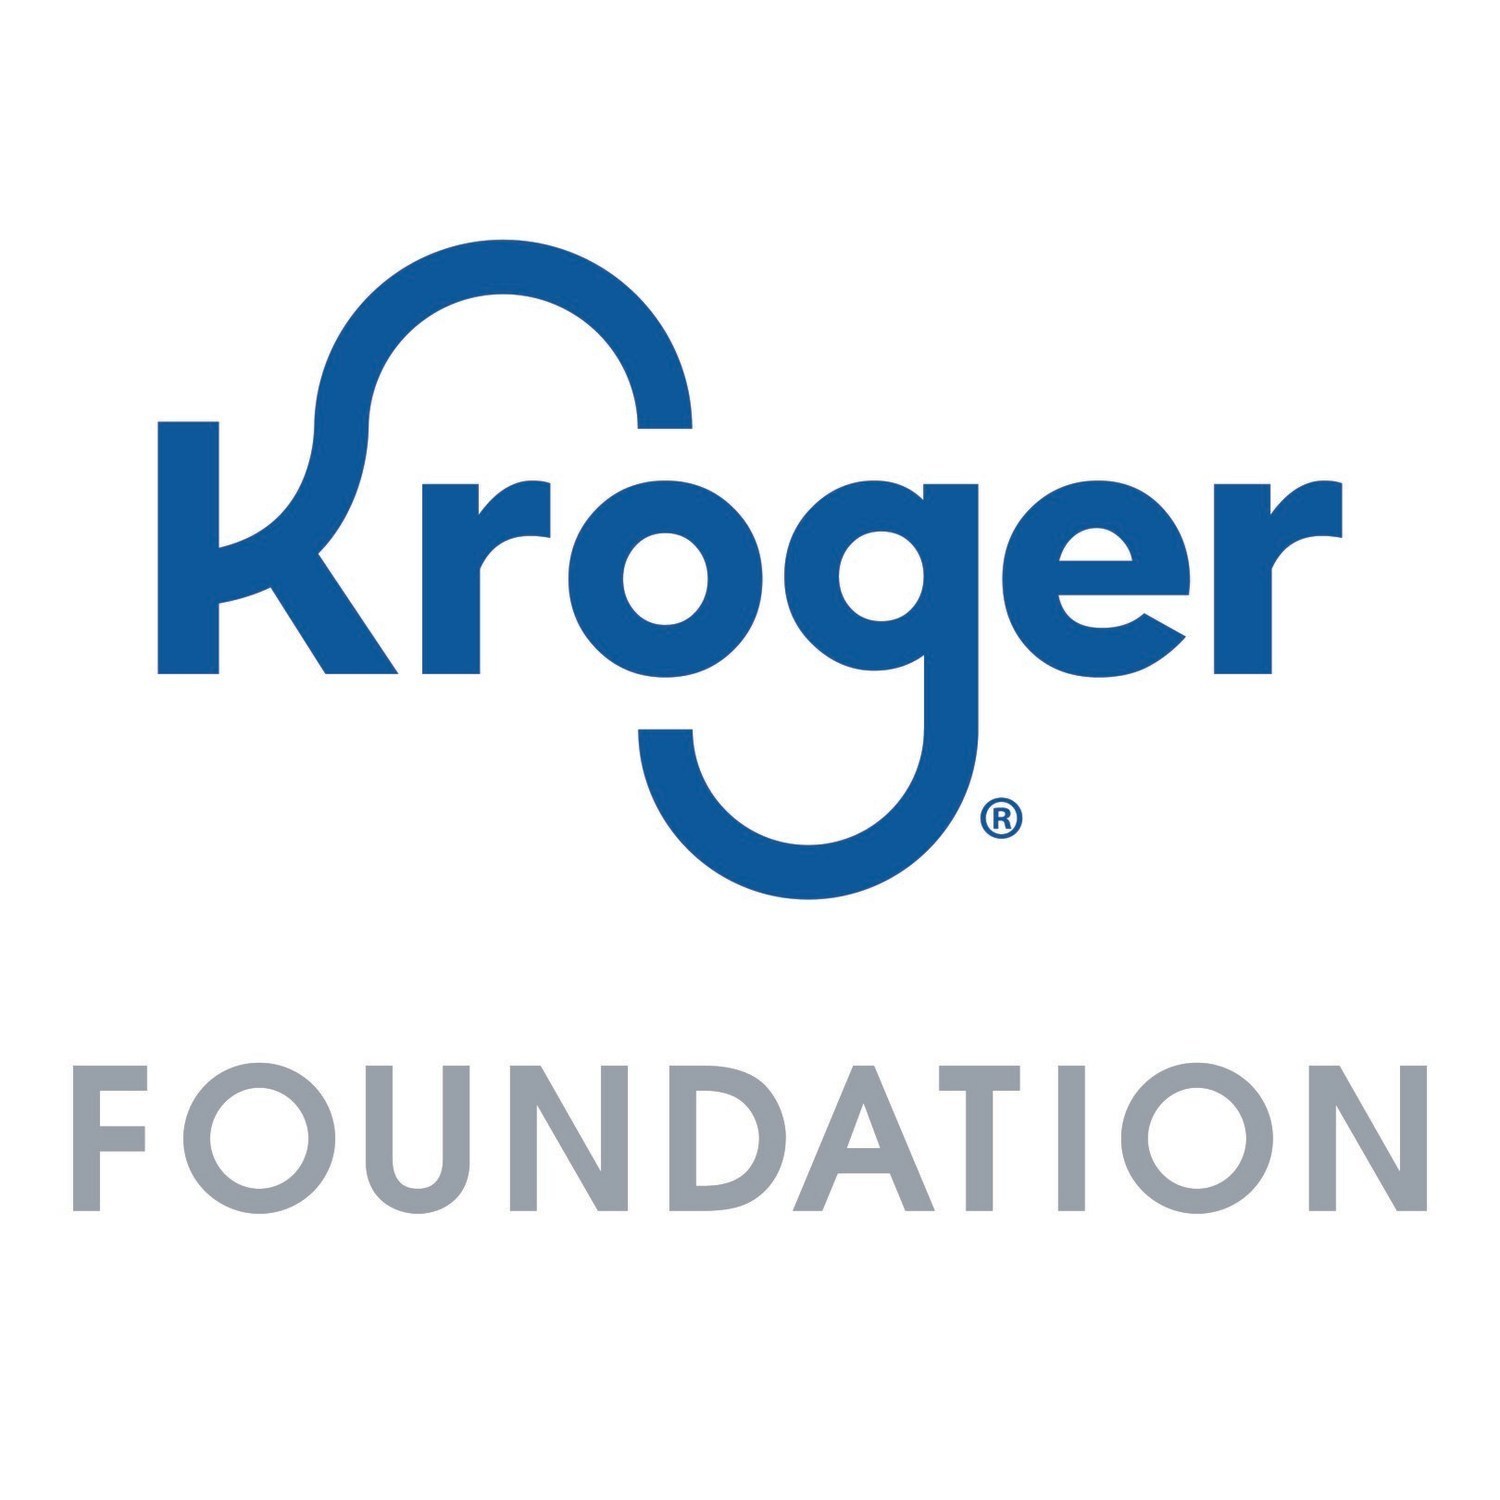 Kroger Foundation (PRNewsfoto/The Kroger Co.)